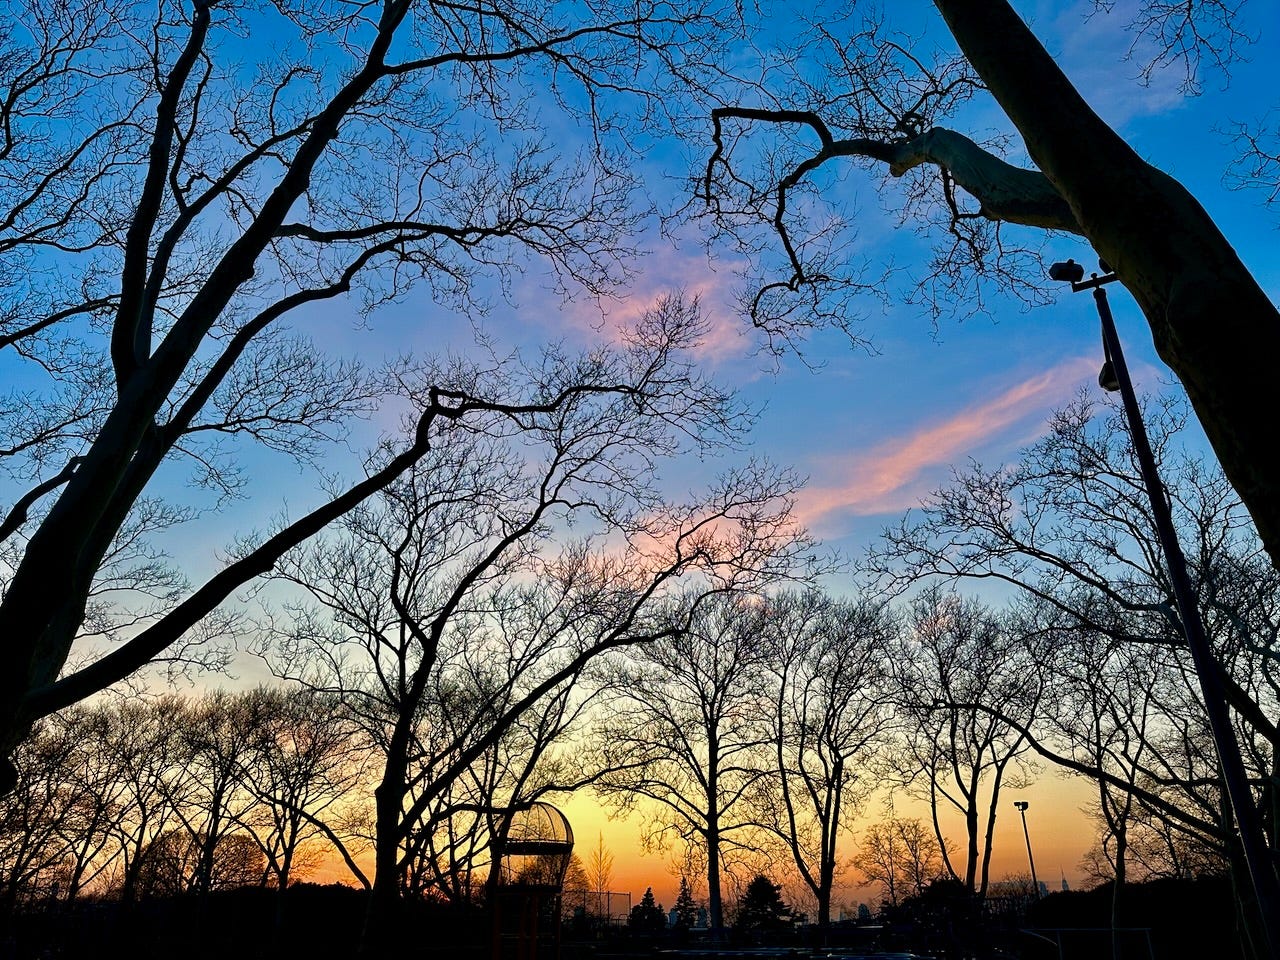 Sunset at the Grover Cleveland Park, Ridgewood (Photo: Elke Nominikat)